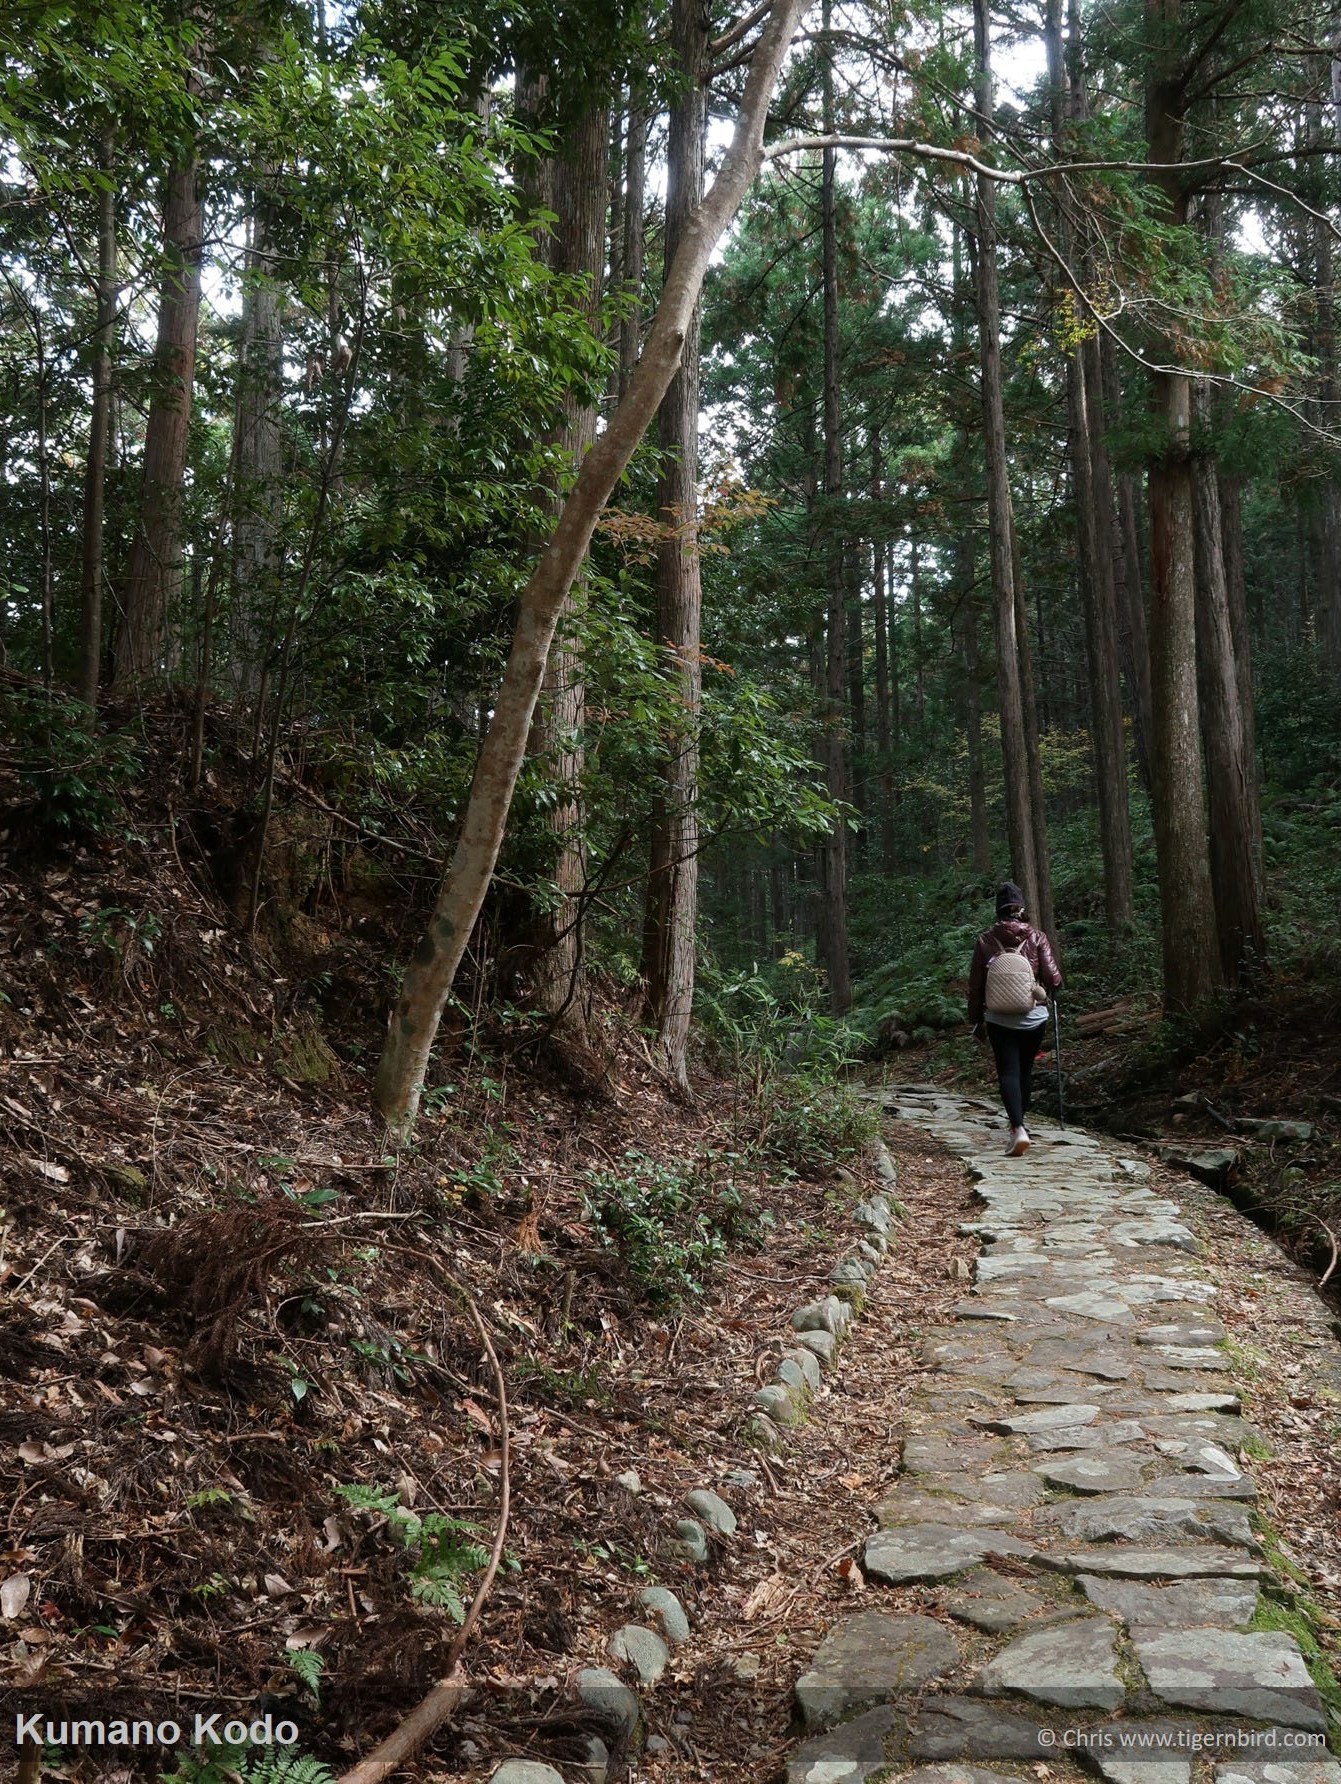 Hiking the stone steps of the Kumano Kodo path in Japan